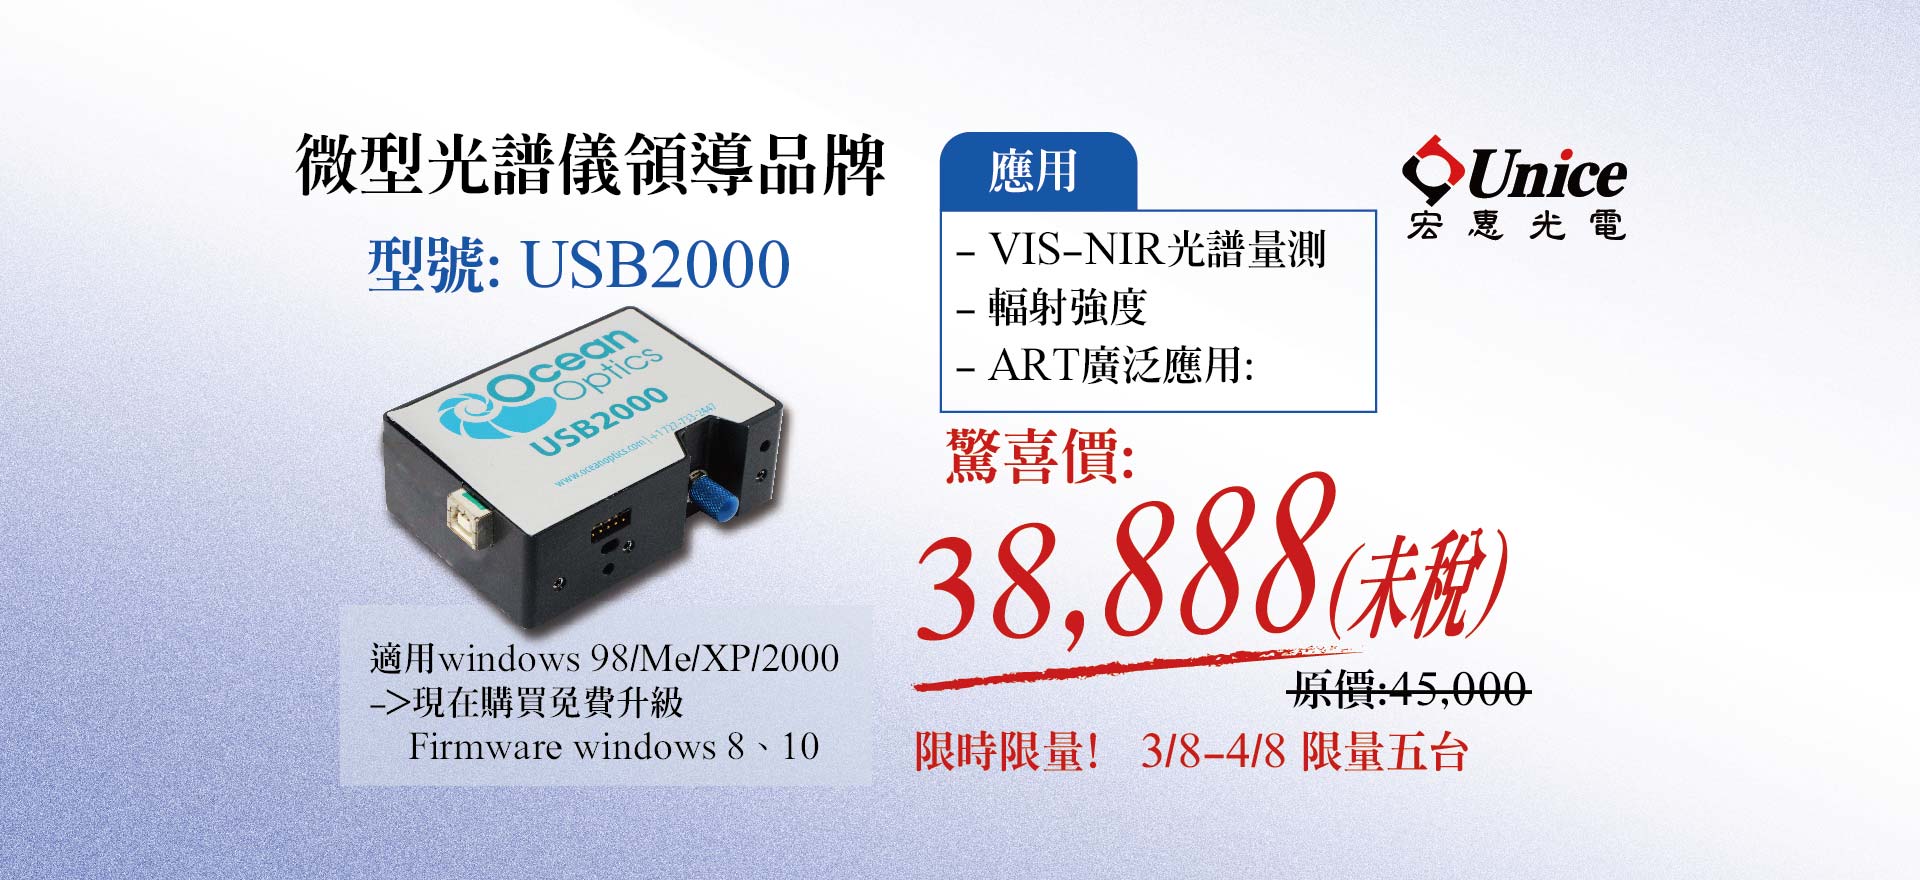 USB2000促銷活動